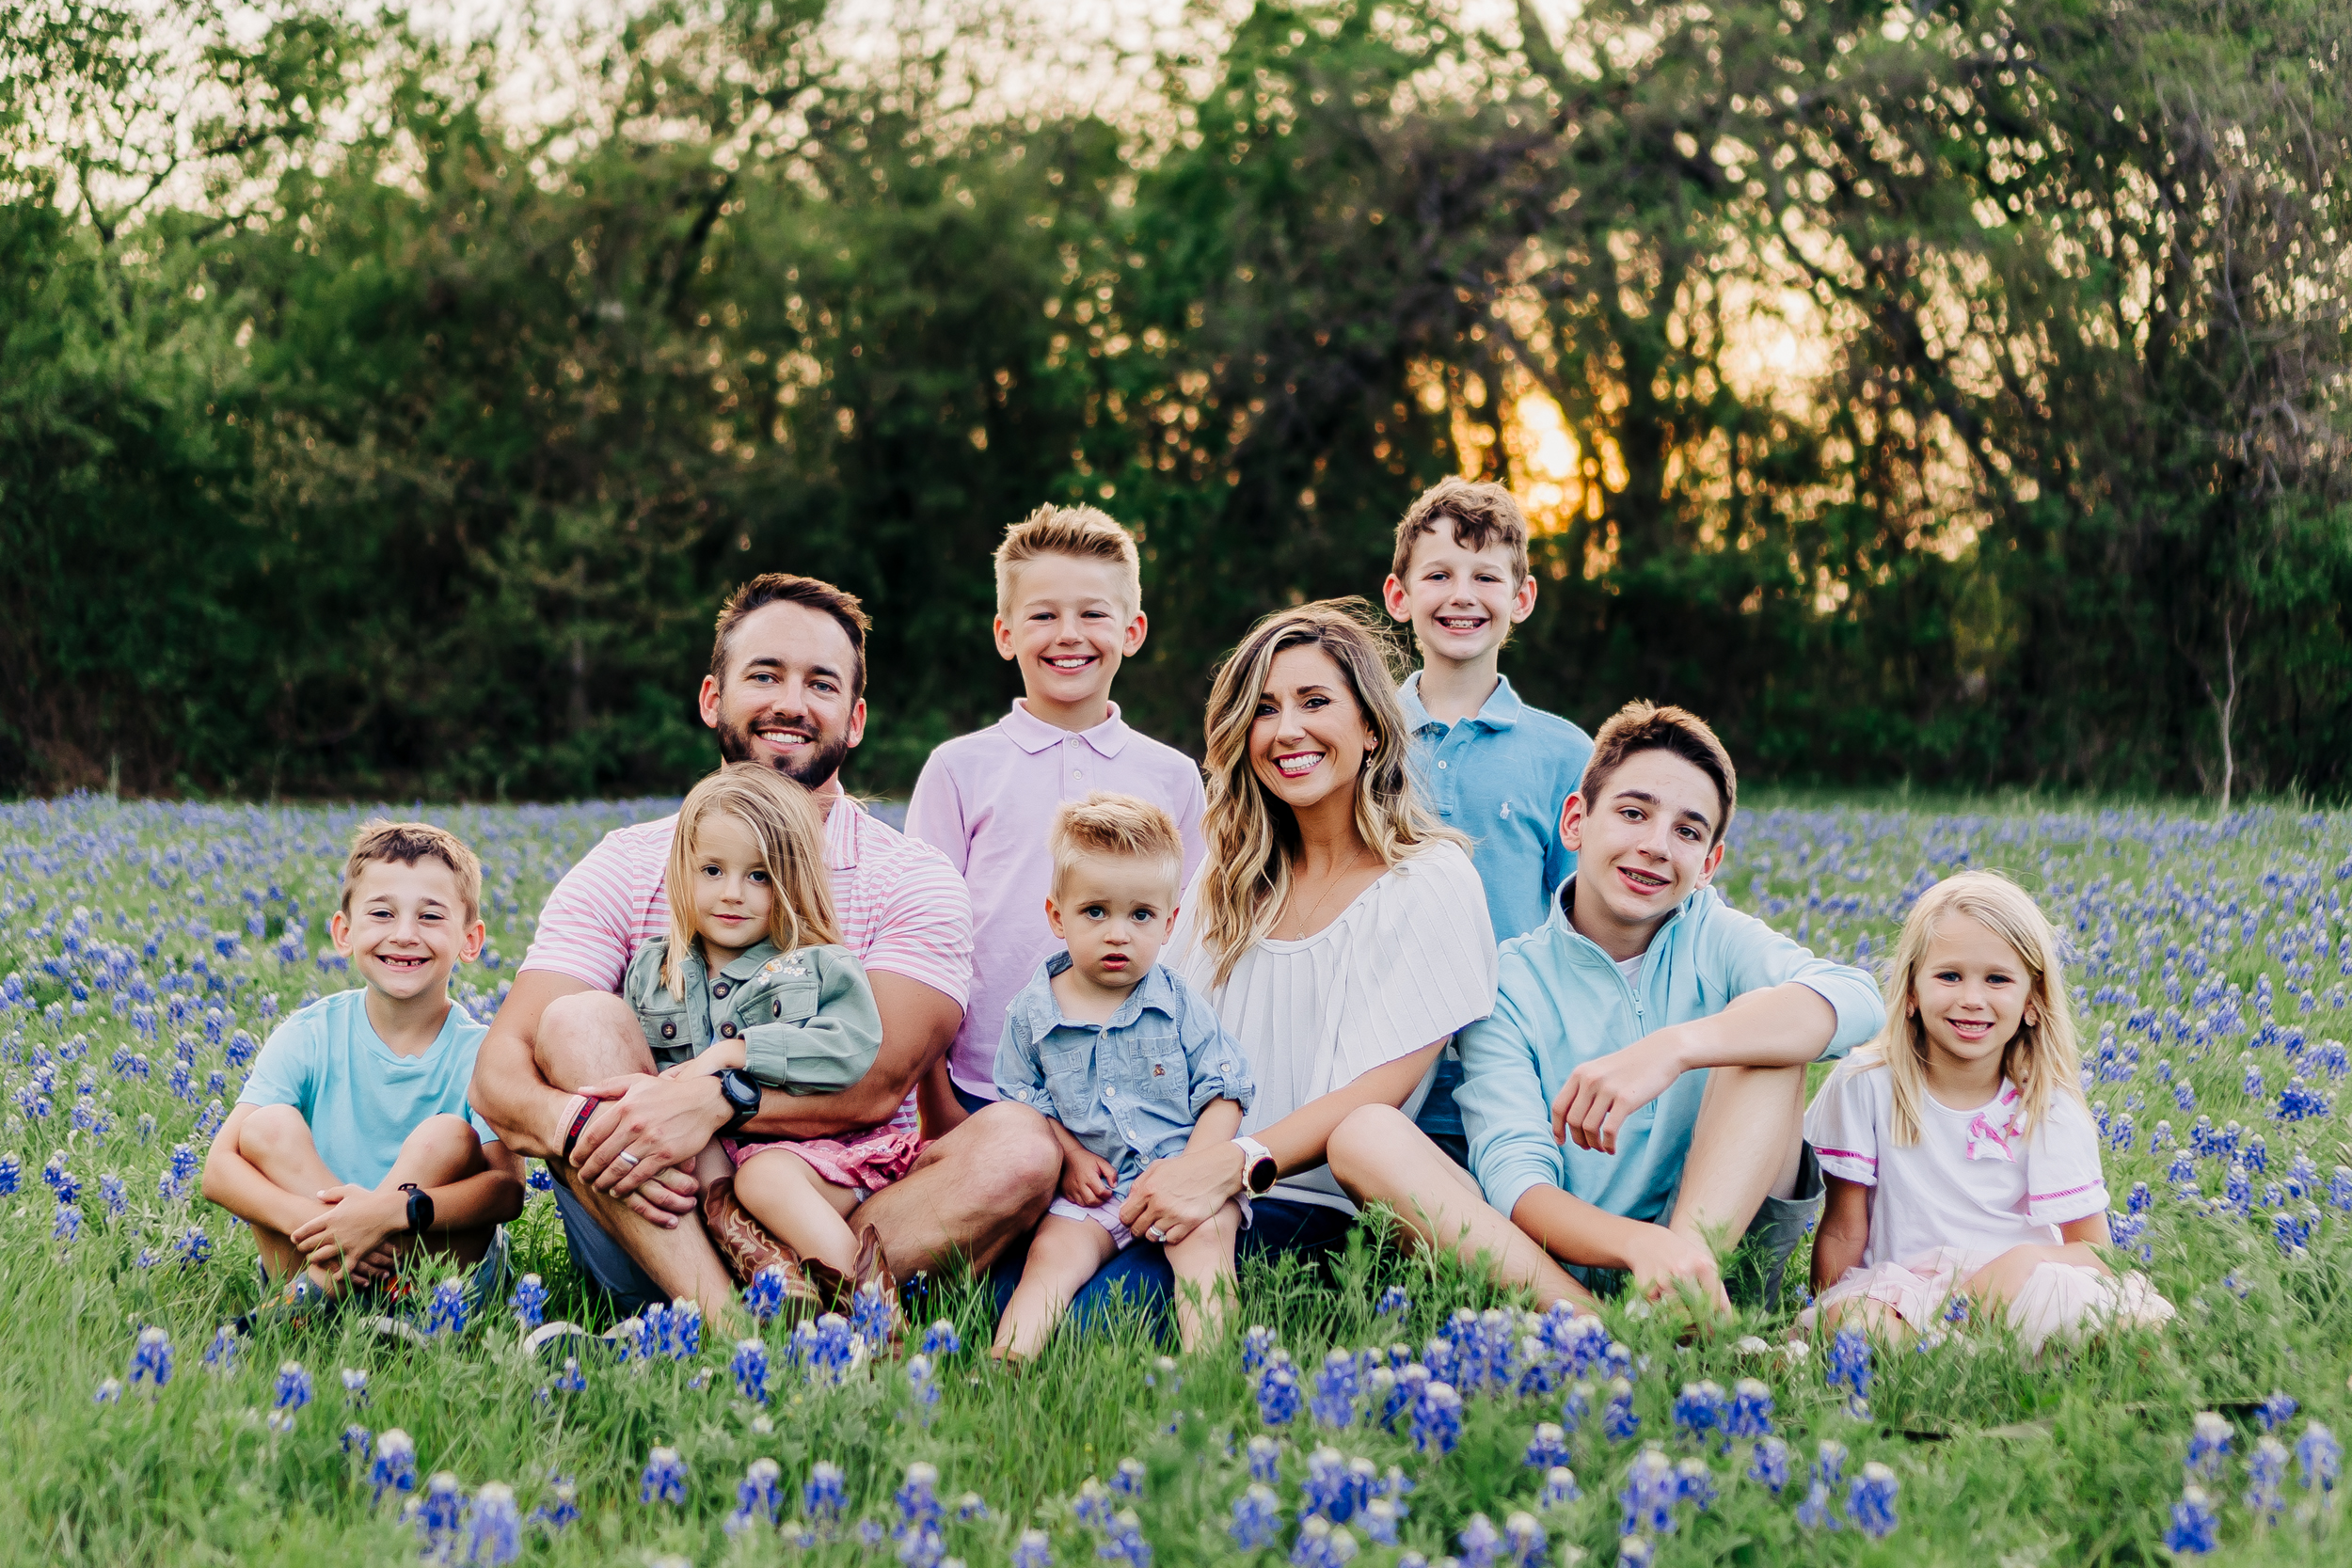 Large family bluebonnet photos | Plano, Texas Family Photographer | via brittnierenee.com